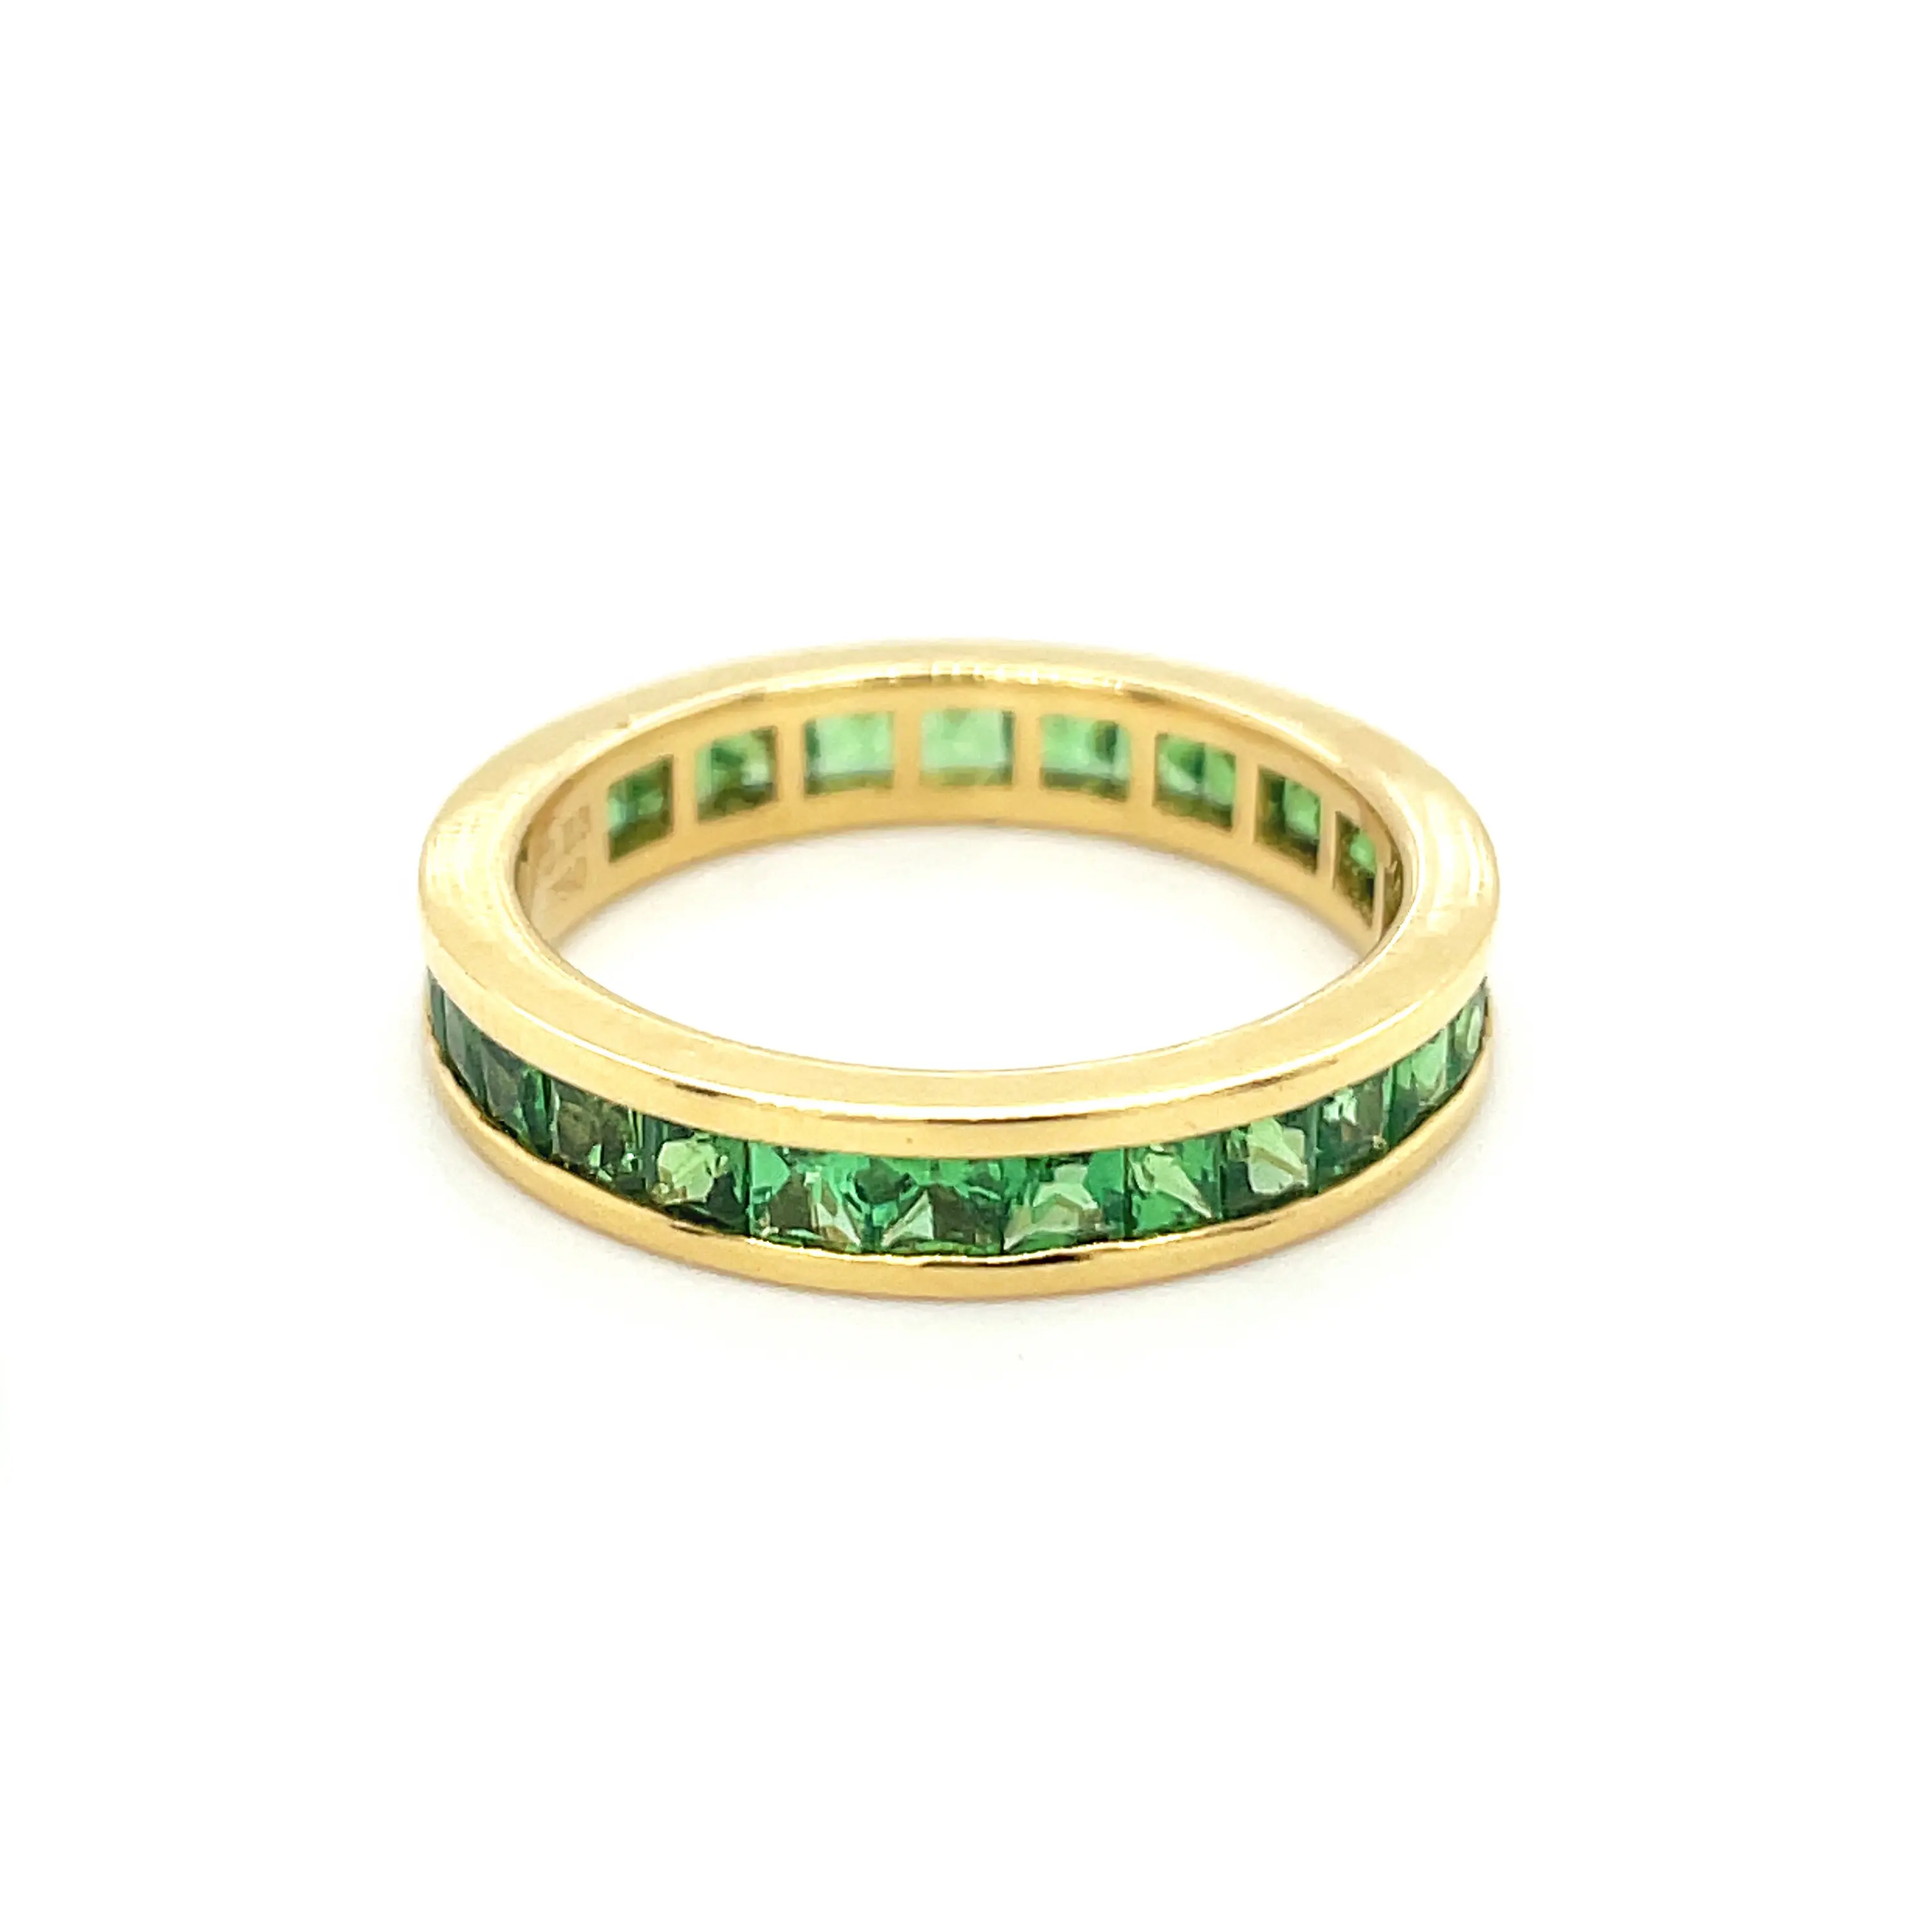 Factory Directly Provide 18K Yellow Gold Natural Green Tsavorite Emerald Princess Shape Ring for Anniversary Gift